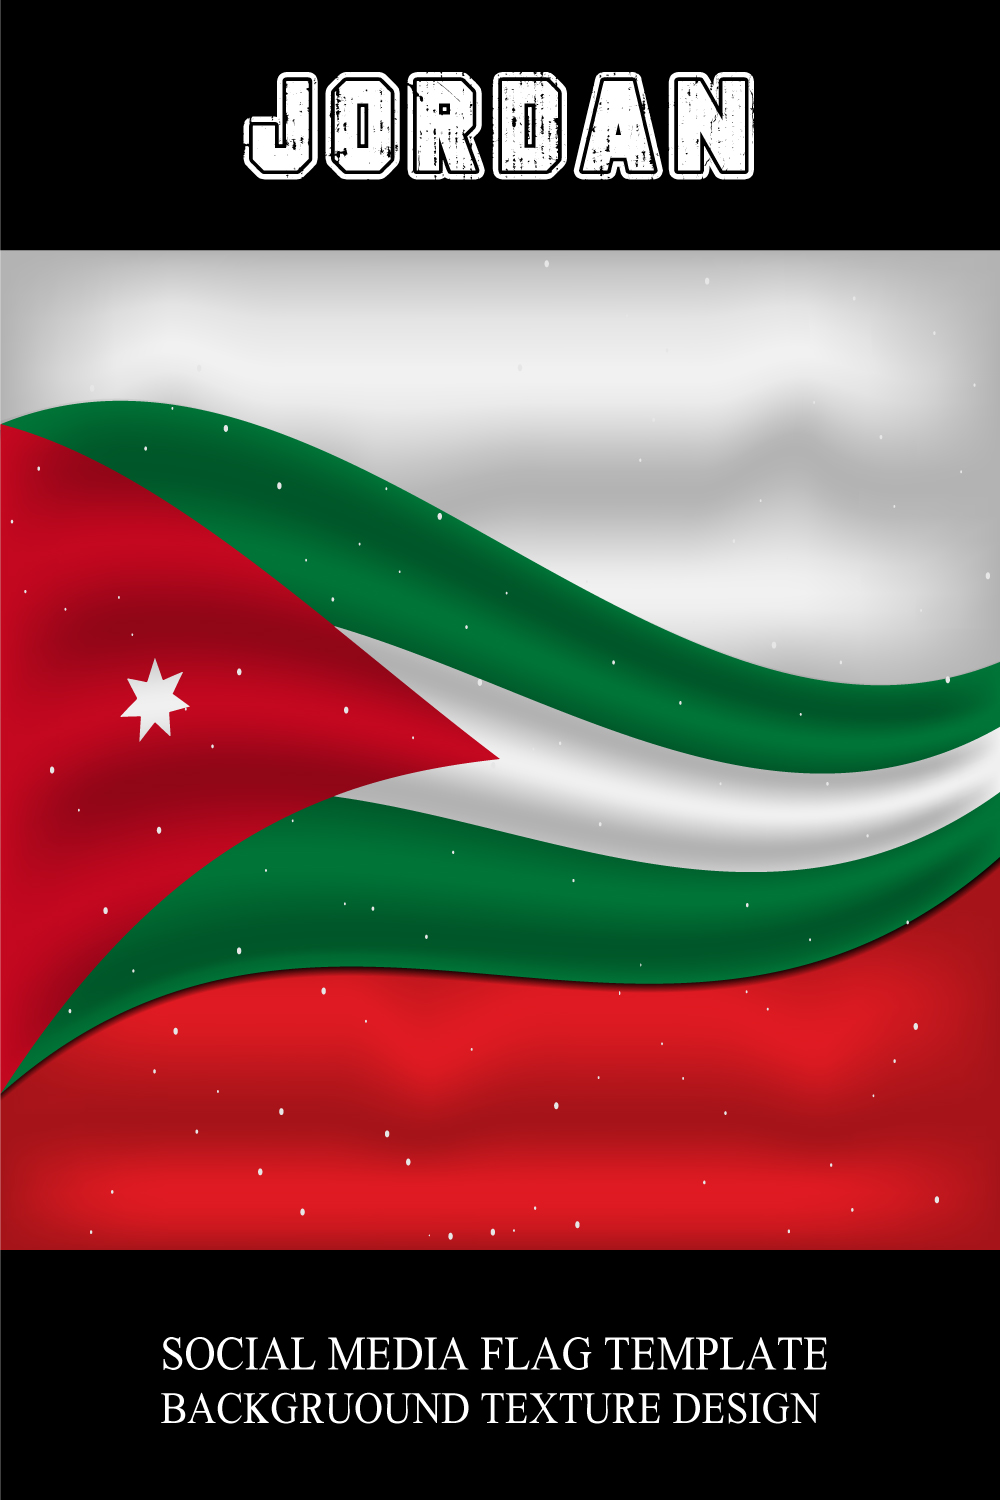 Unique image of the flag of Jordan.